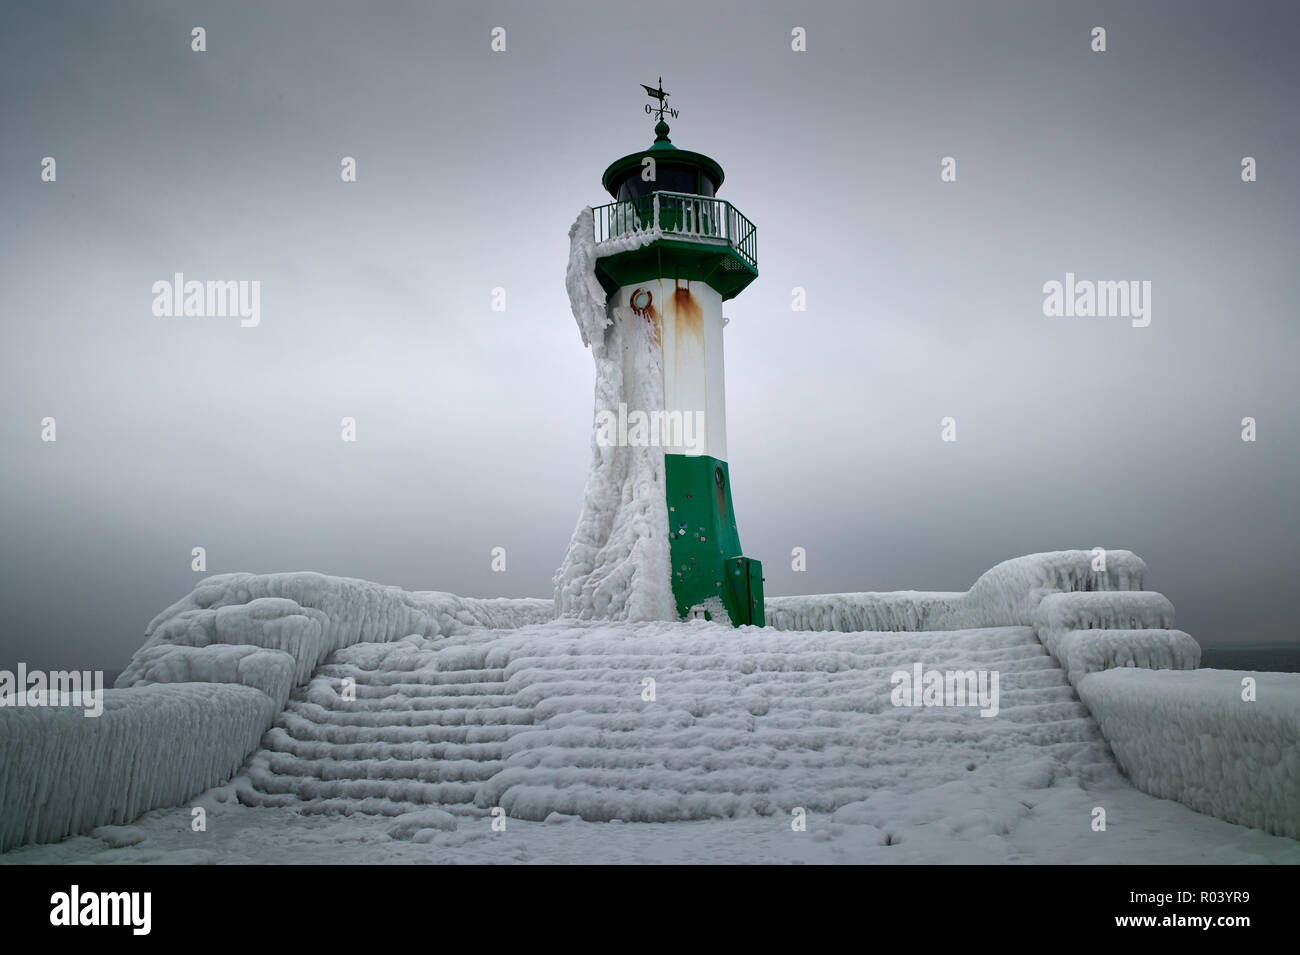 Baltic Sea island Ruegen, Mecklenburg-Vorpommern, Germany - Lighthouse Sassnitz in Winter Stock Photo